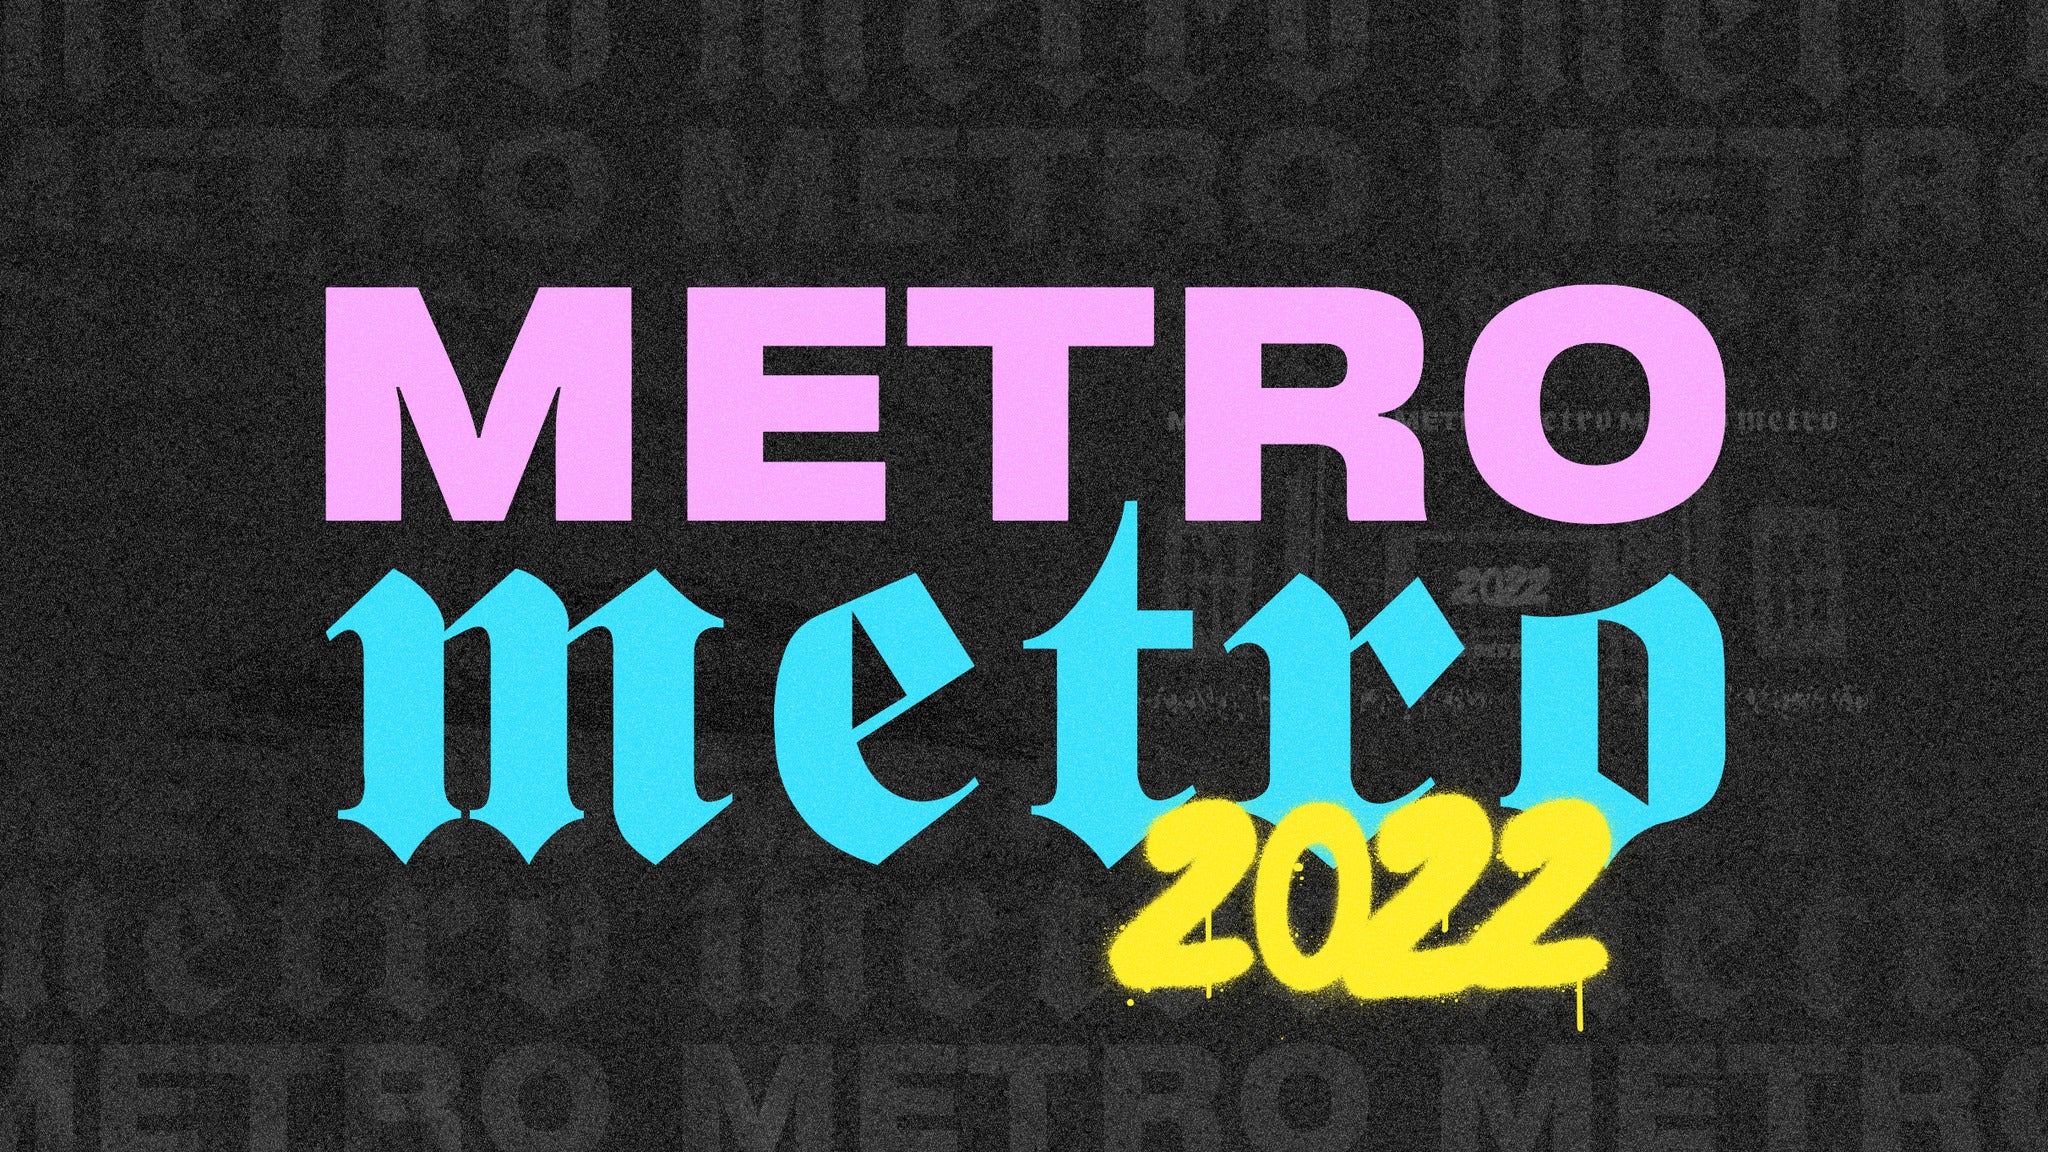 Festival Metro Metro presale information on freepresalepasswords.com